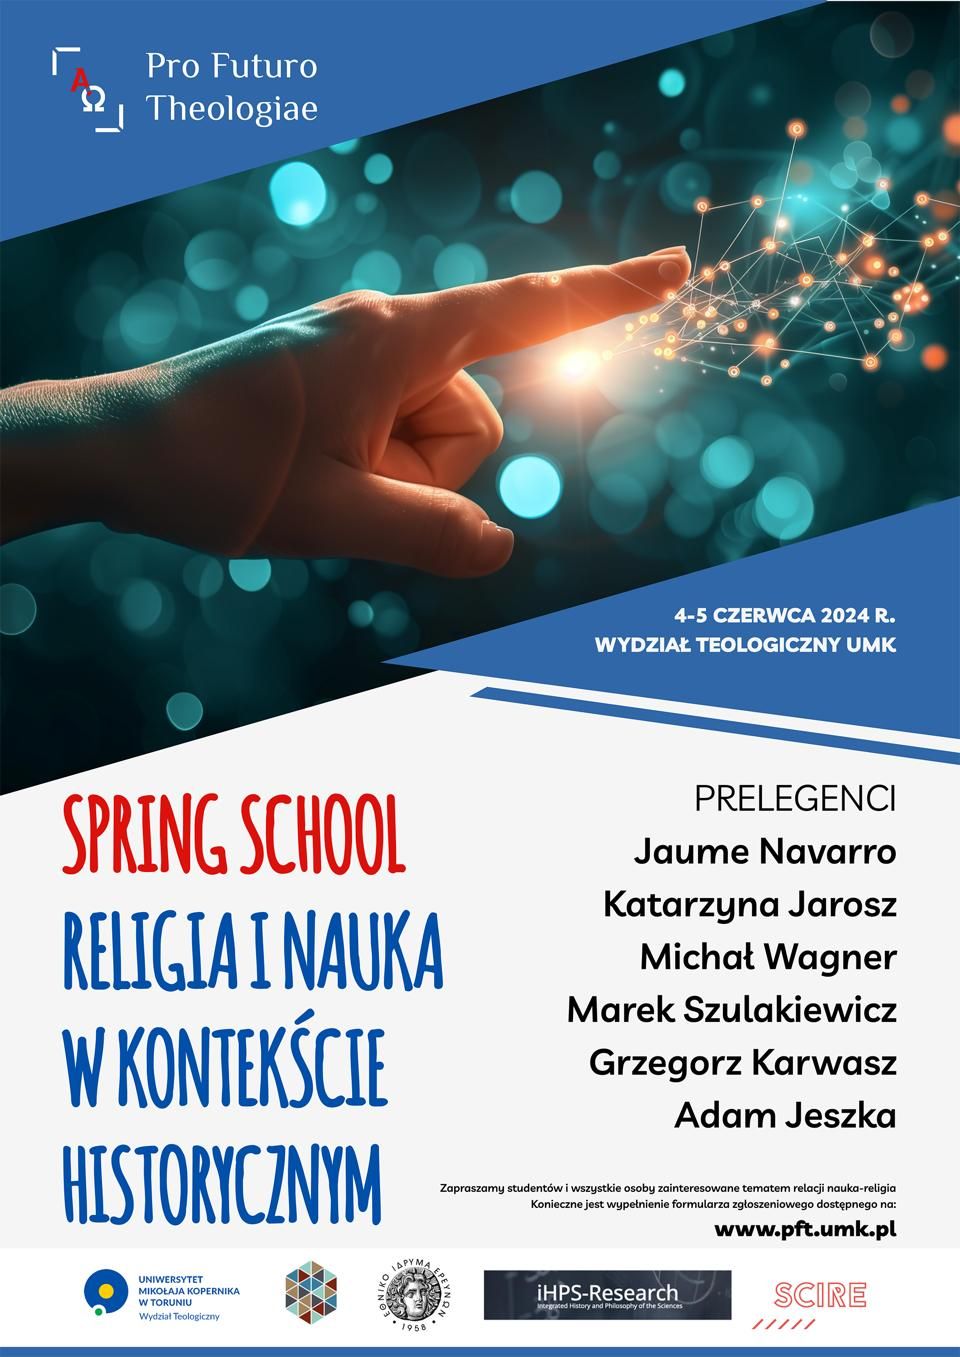 Spring School in Poland